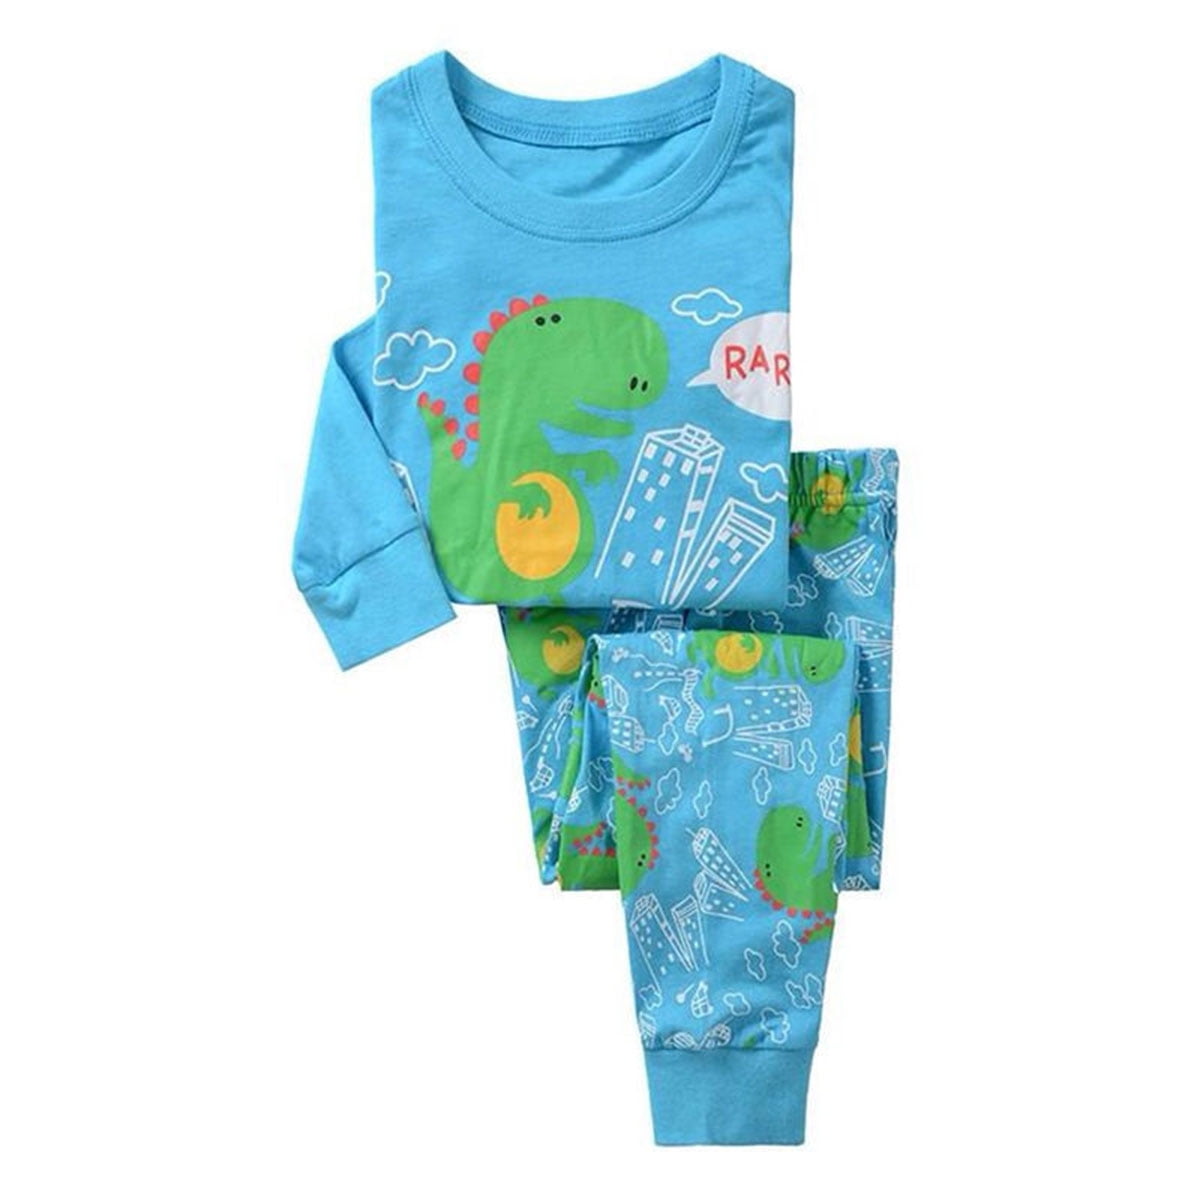 Boys Pajamas Cotton Long Sleeves Toddler Clothes Fish Kids Pjs Sleepwear 2 Piece